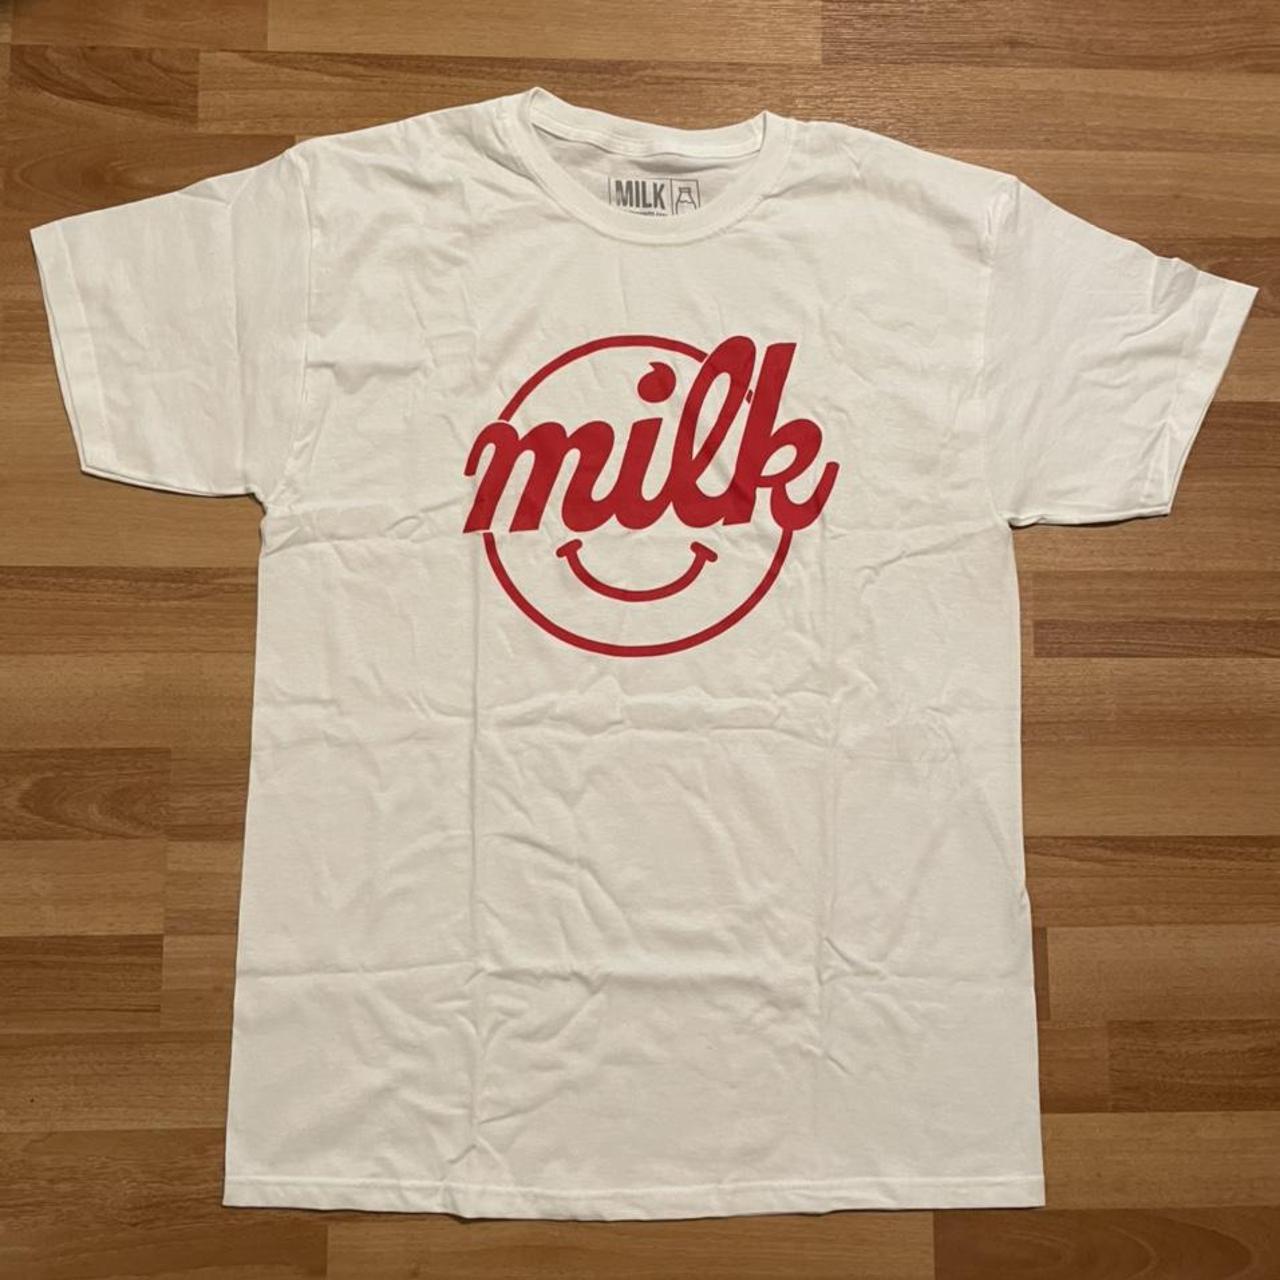 Milk Toronto Made in Canada tshirt Size XL Brand... - Depop